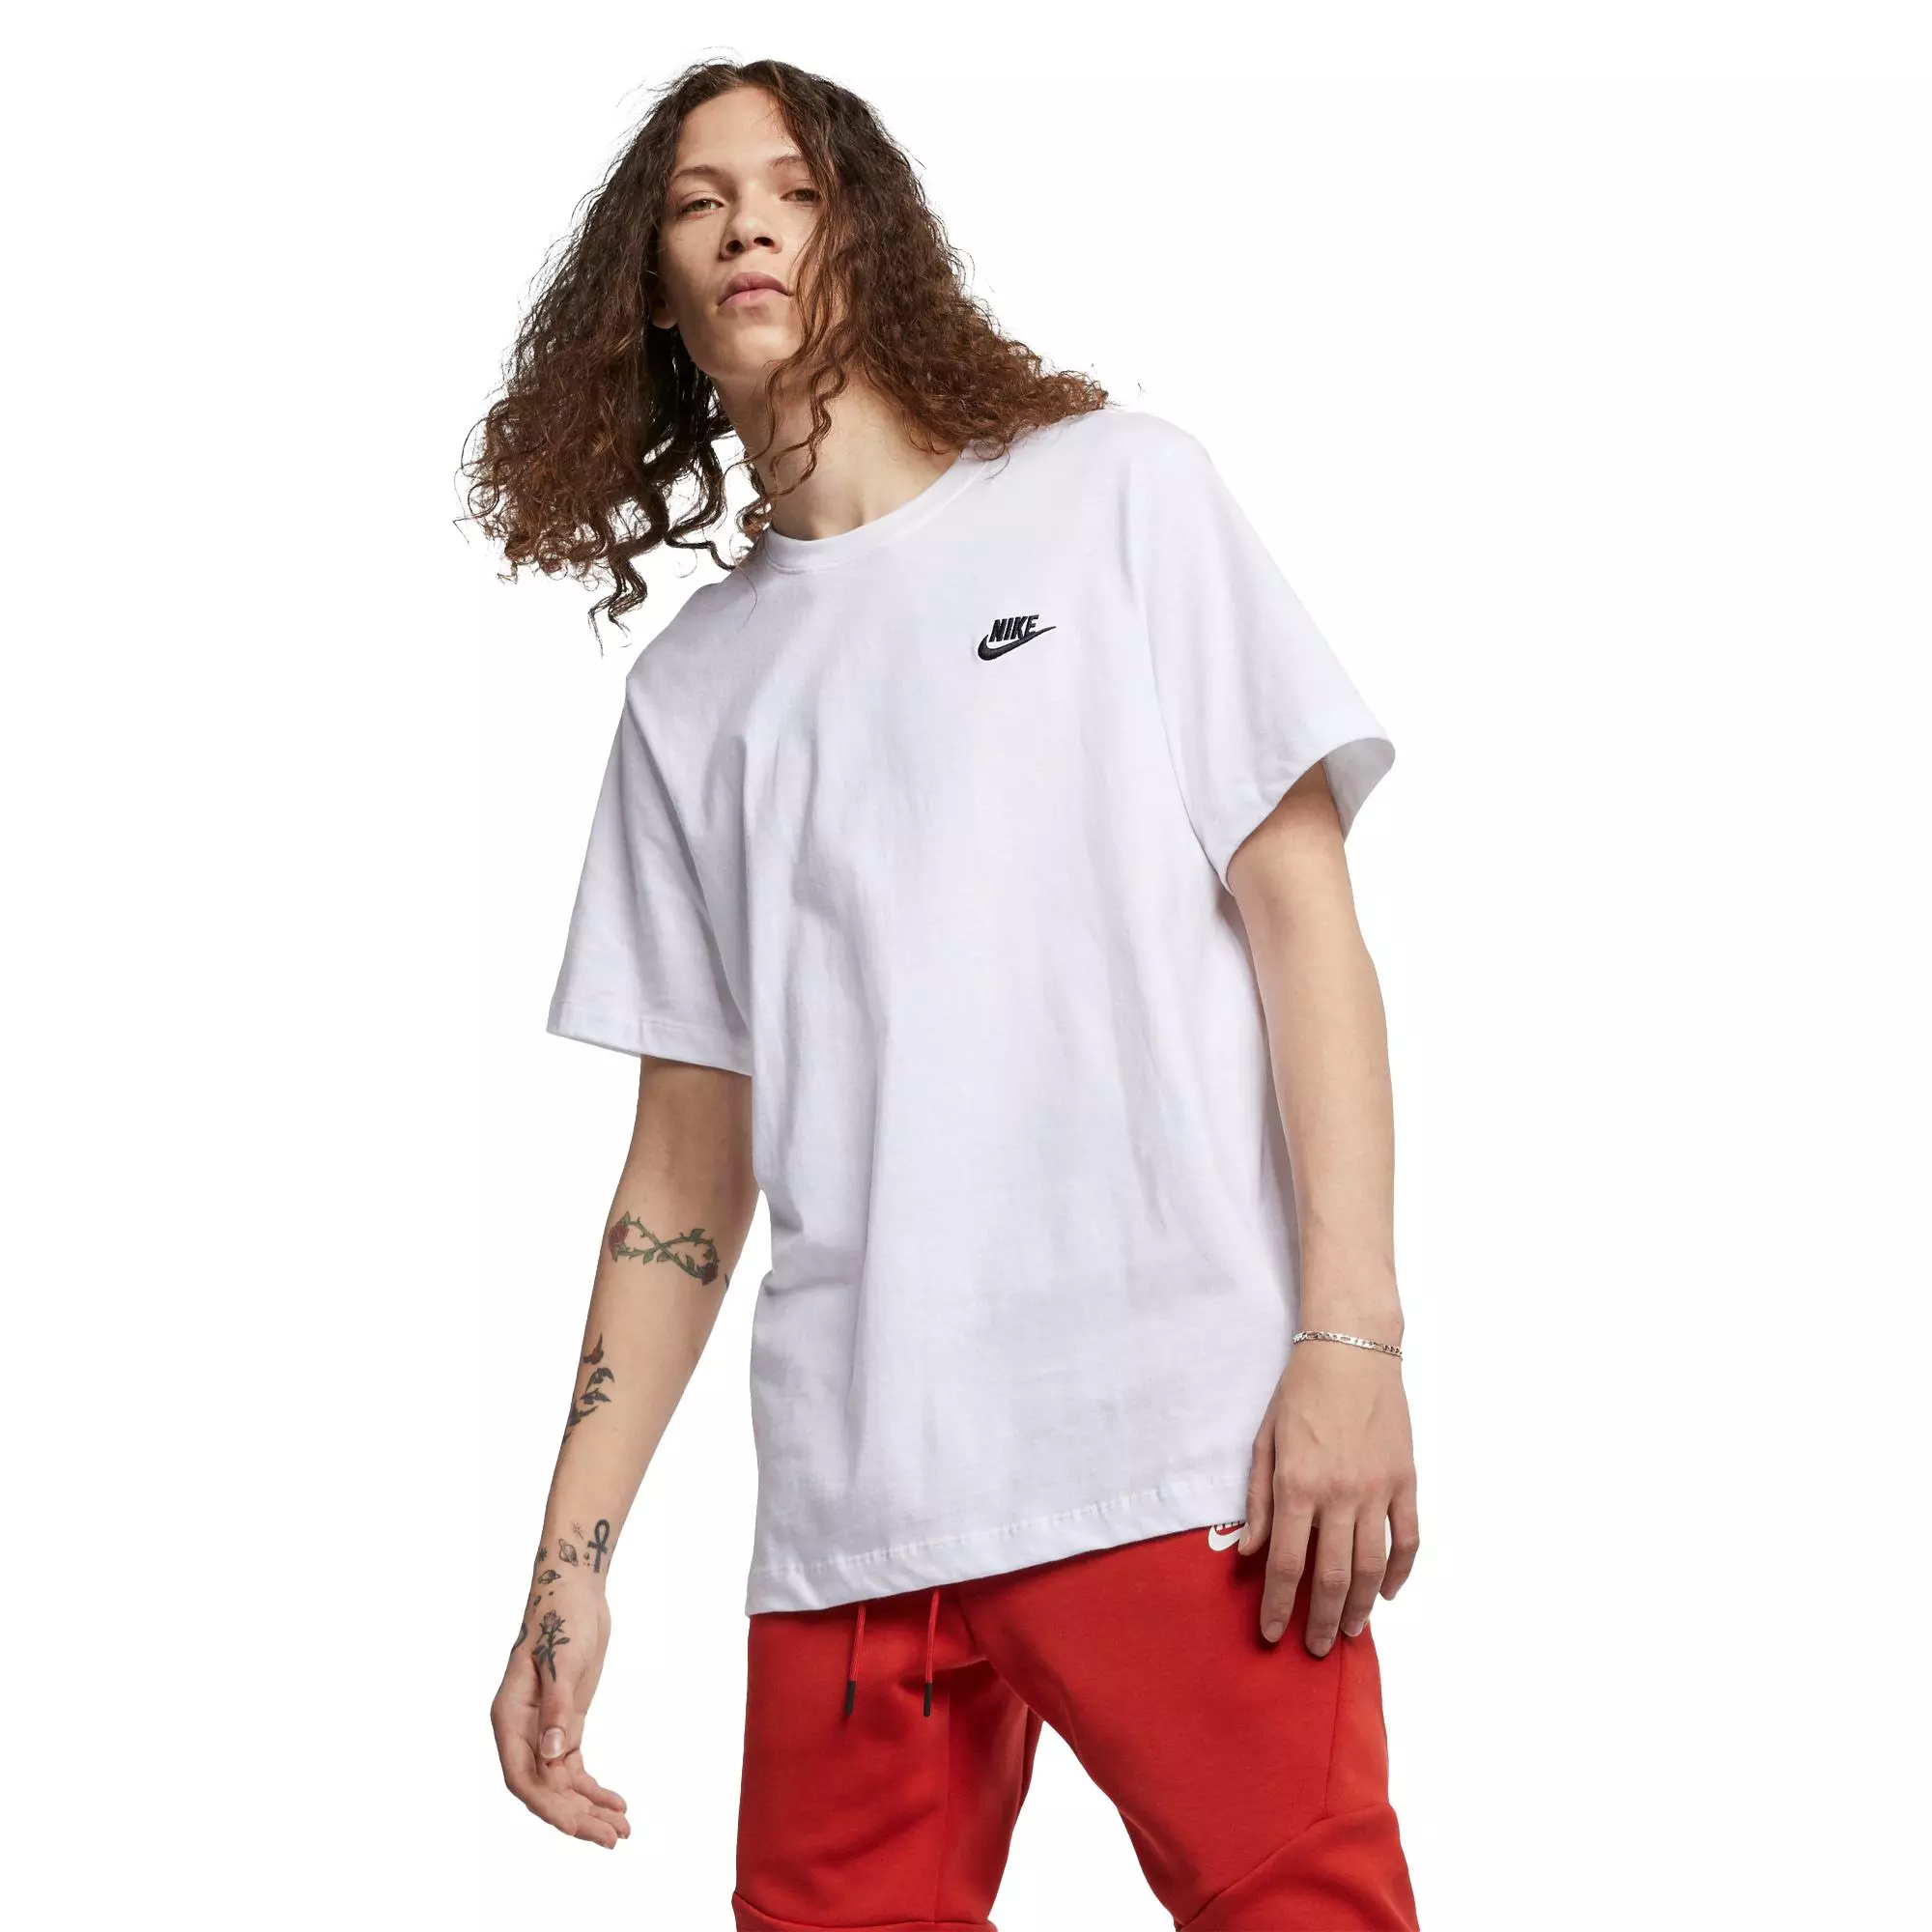 PRADA | White Men‘s T-shirt | YOOX